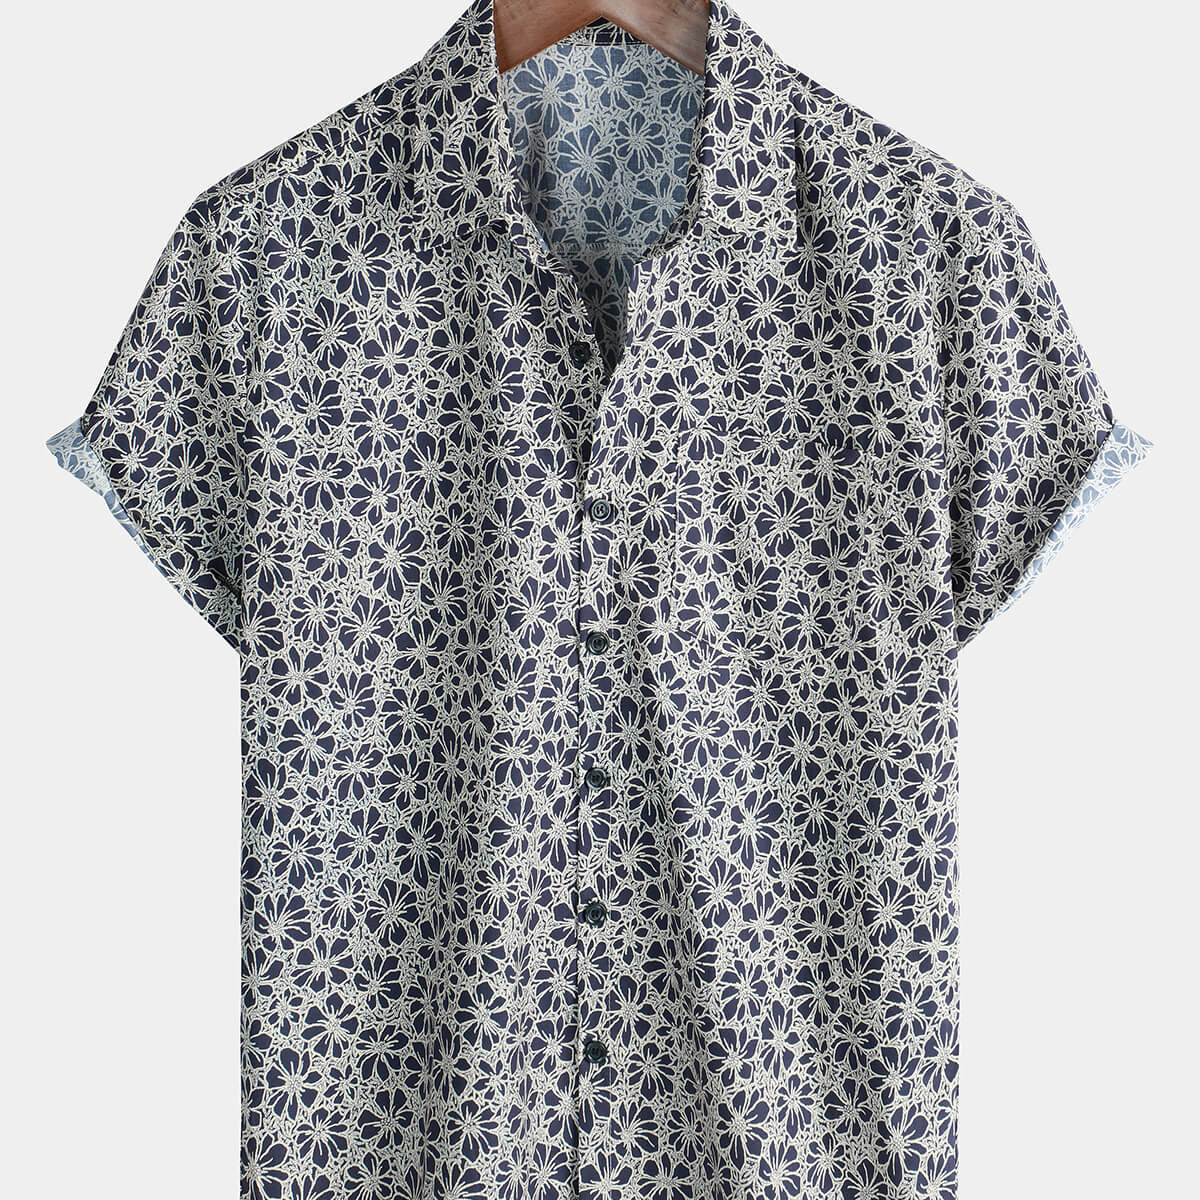 Men's Holiday Summer Cotton Floral Button Up Short Sleeve Shirt